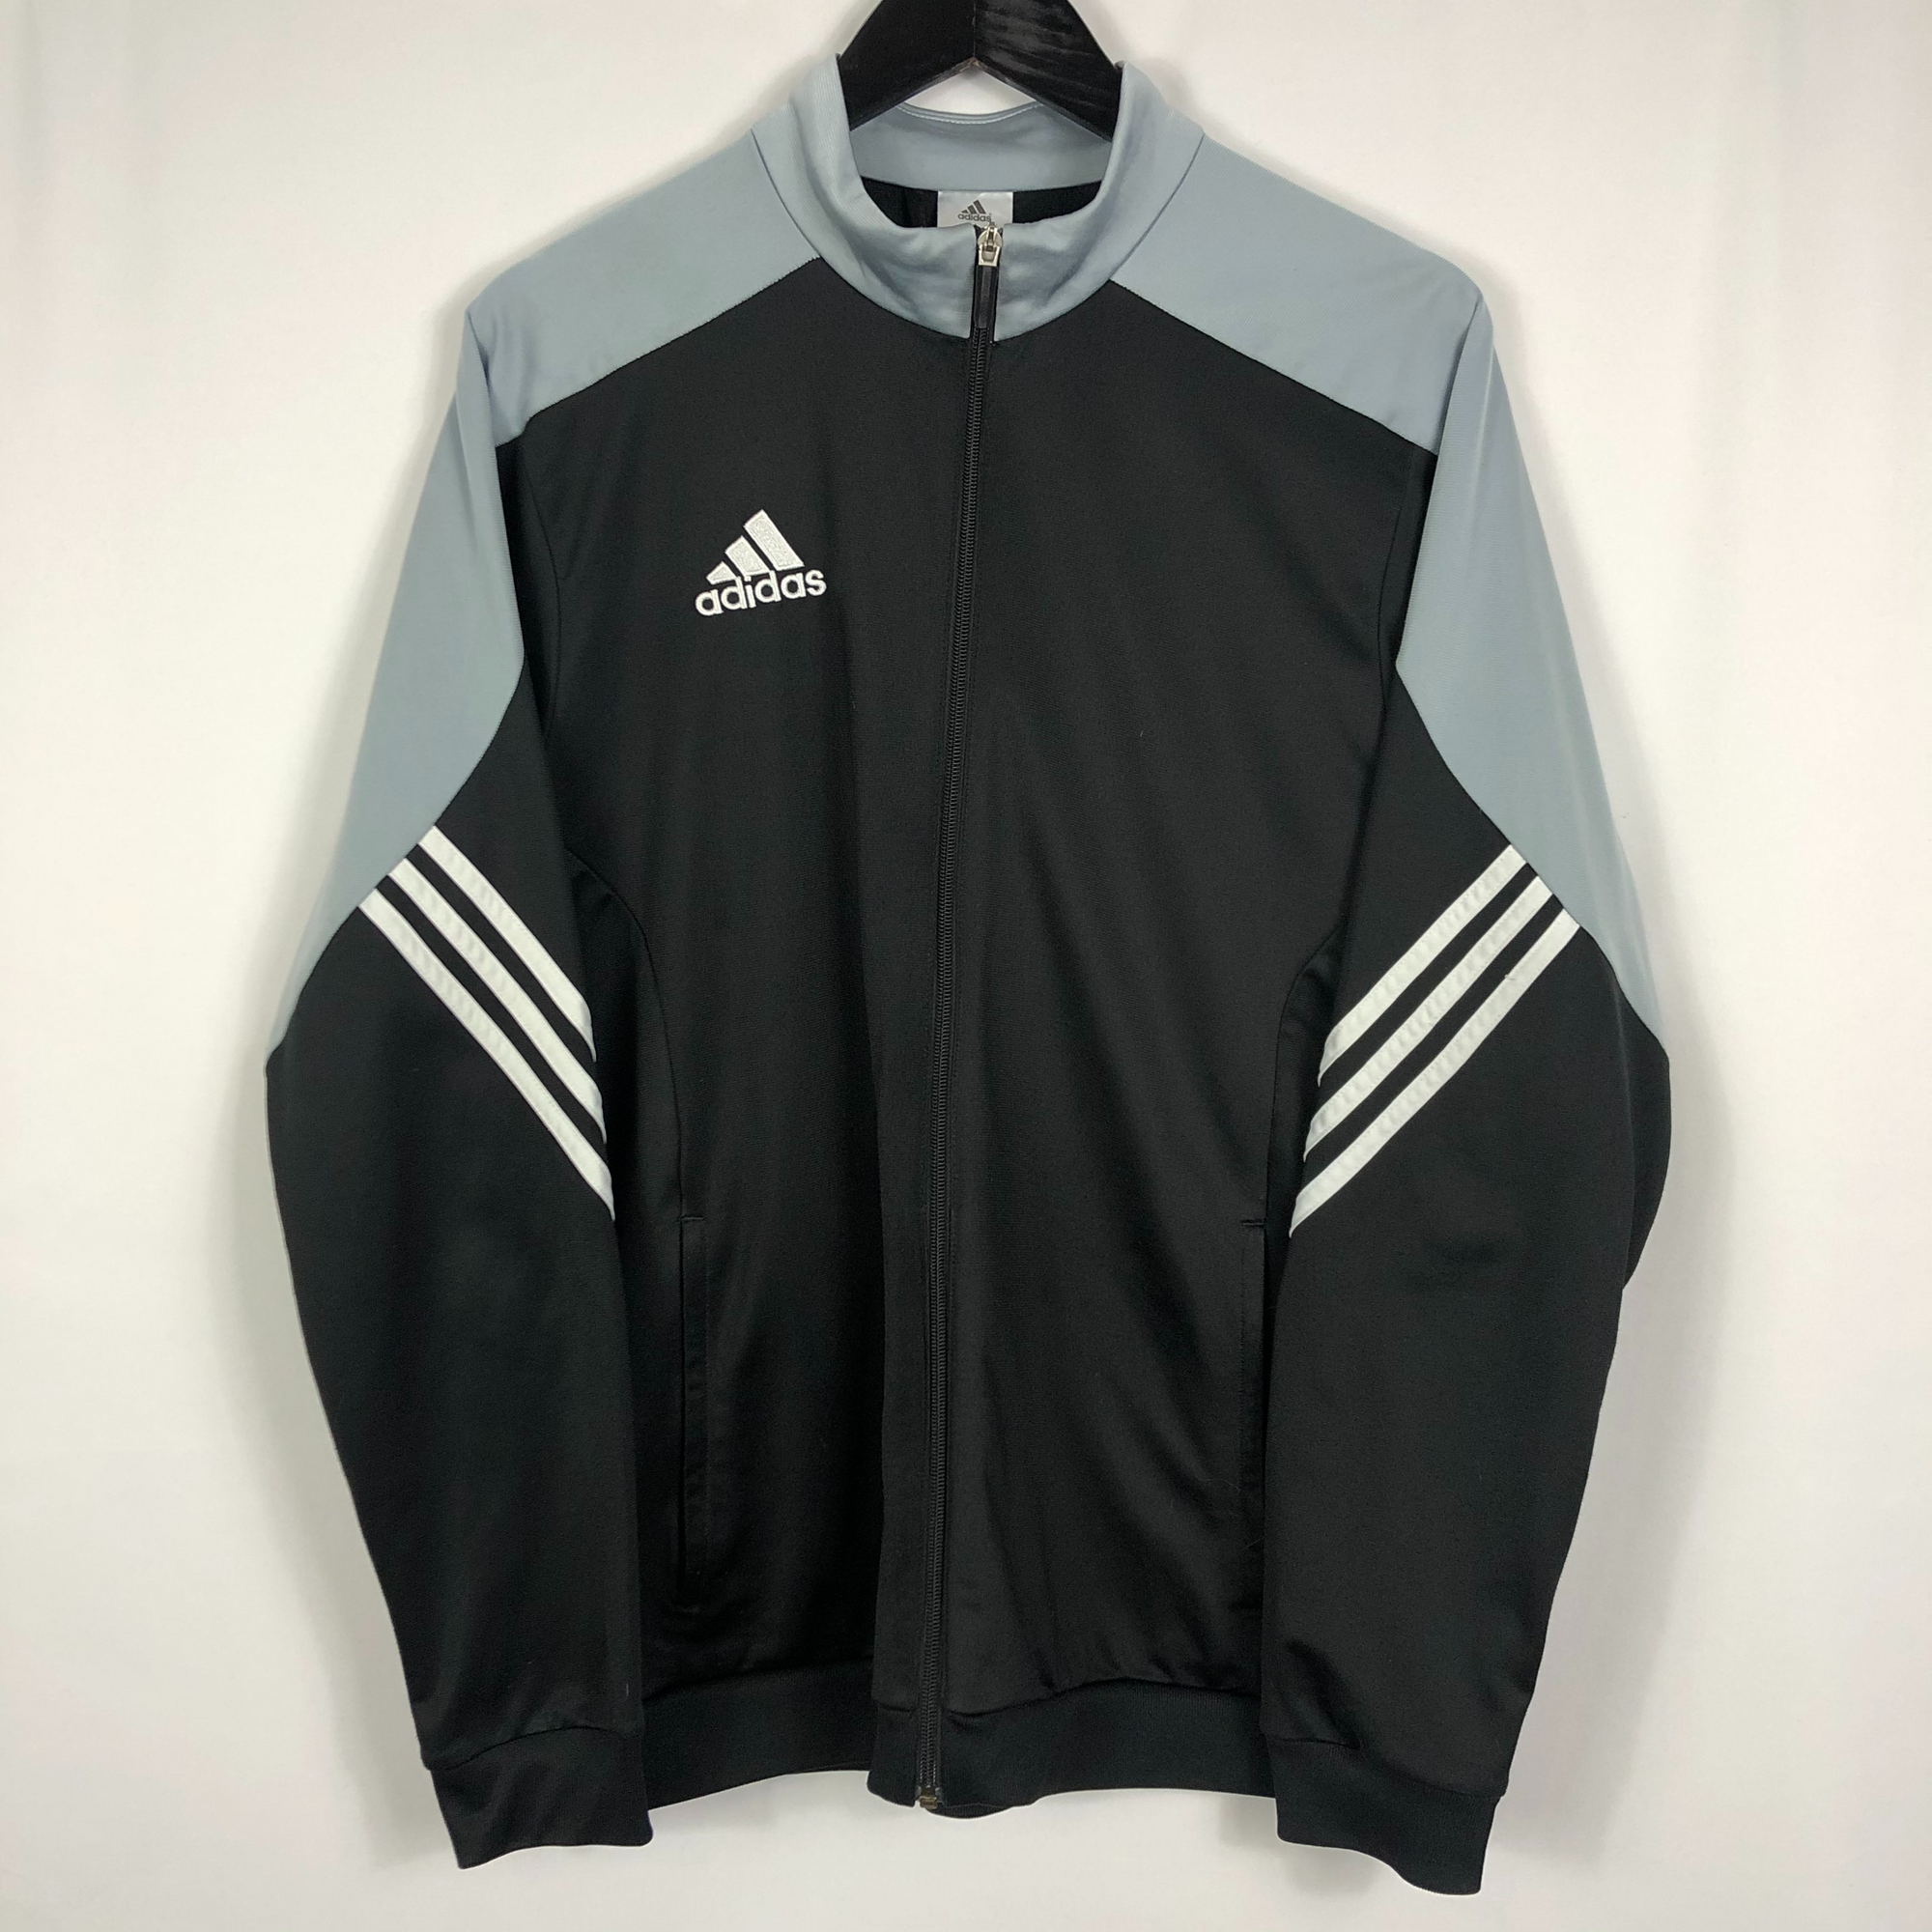 Vintage Adidas Track Jacket in Grey & Black - Men's Medium/Women's Large